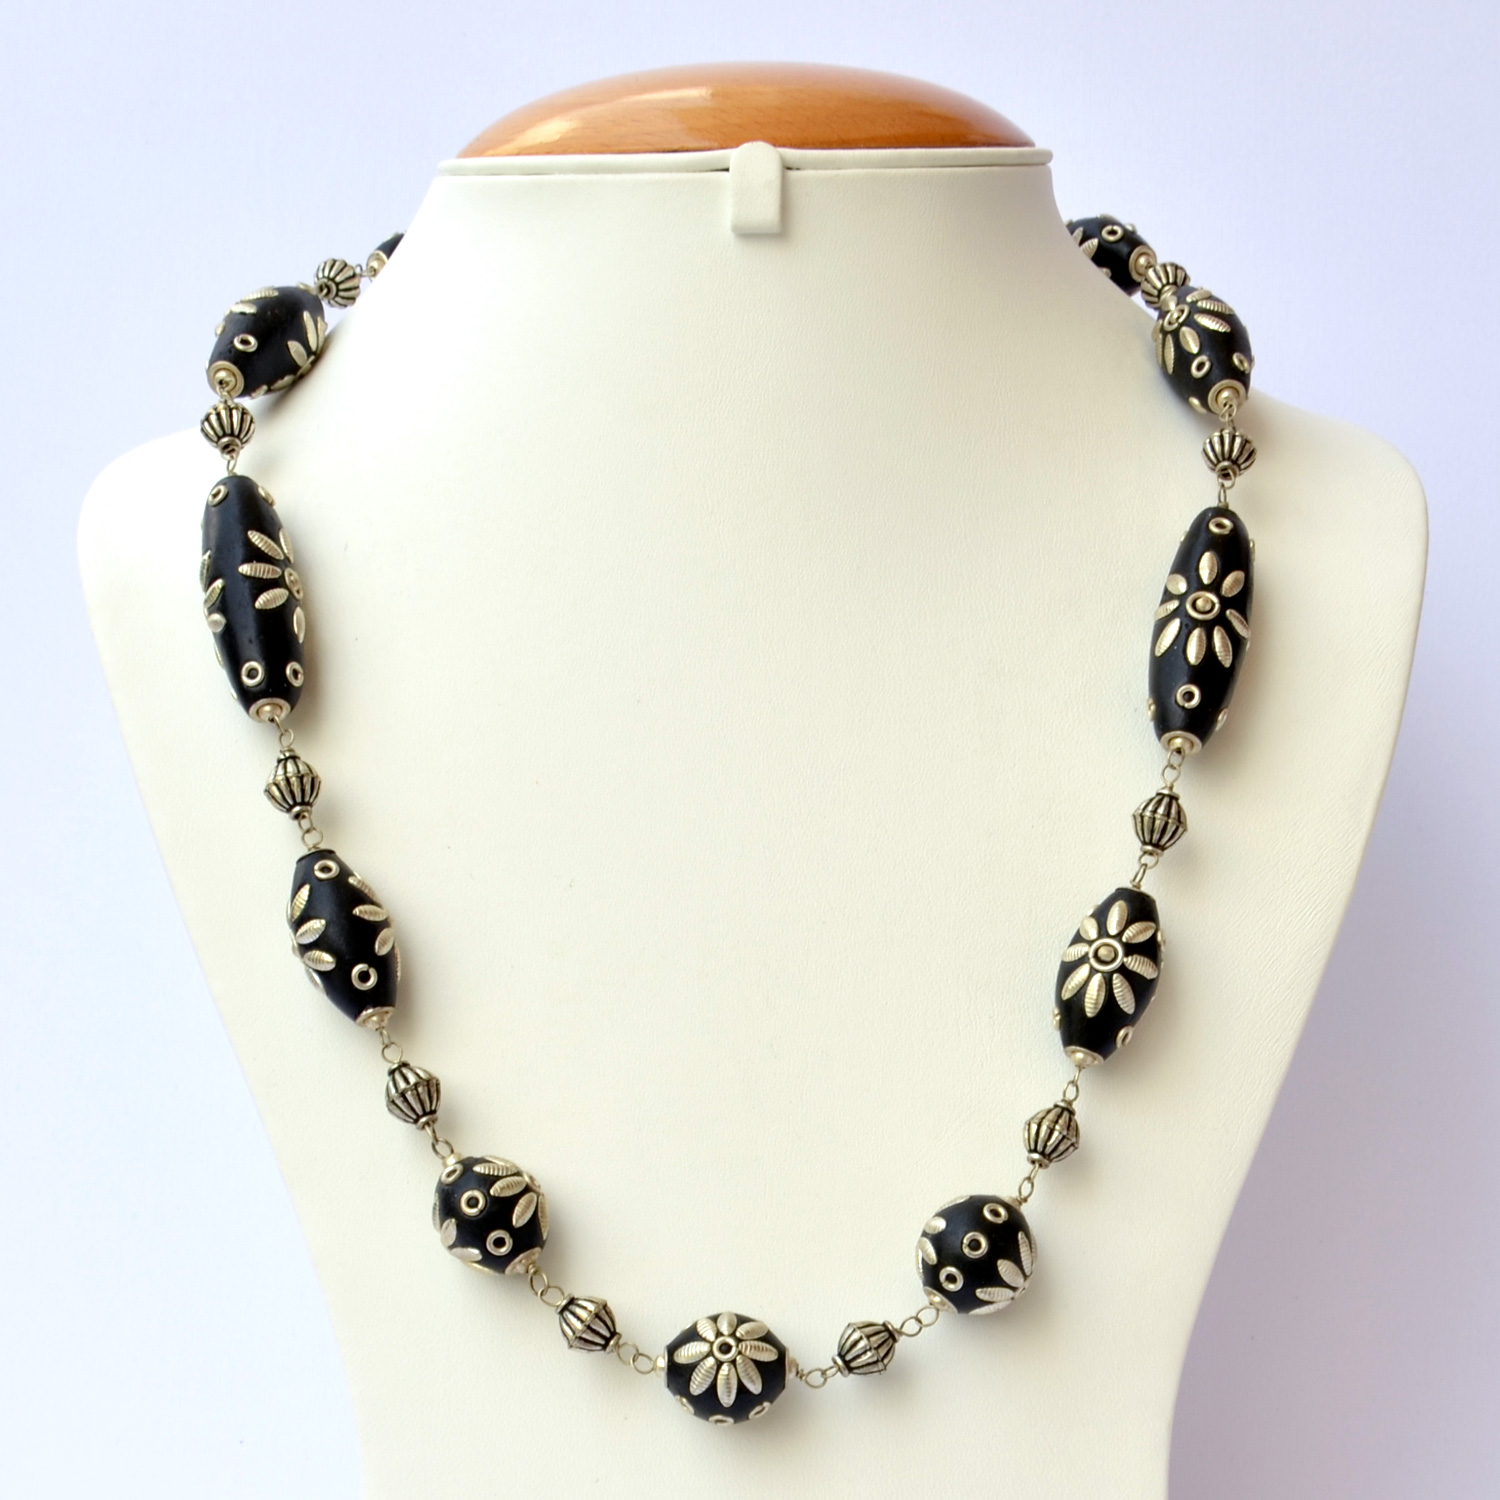 Handmade jewellery designs with beads